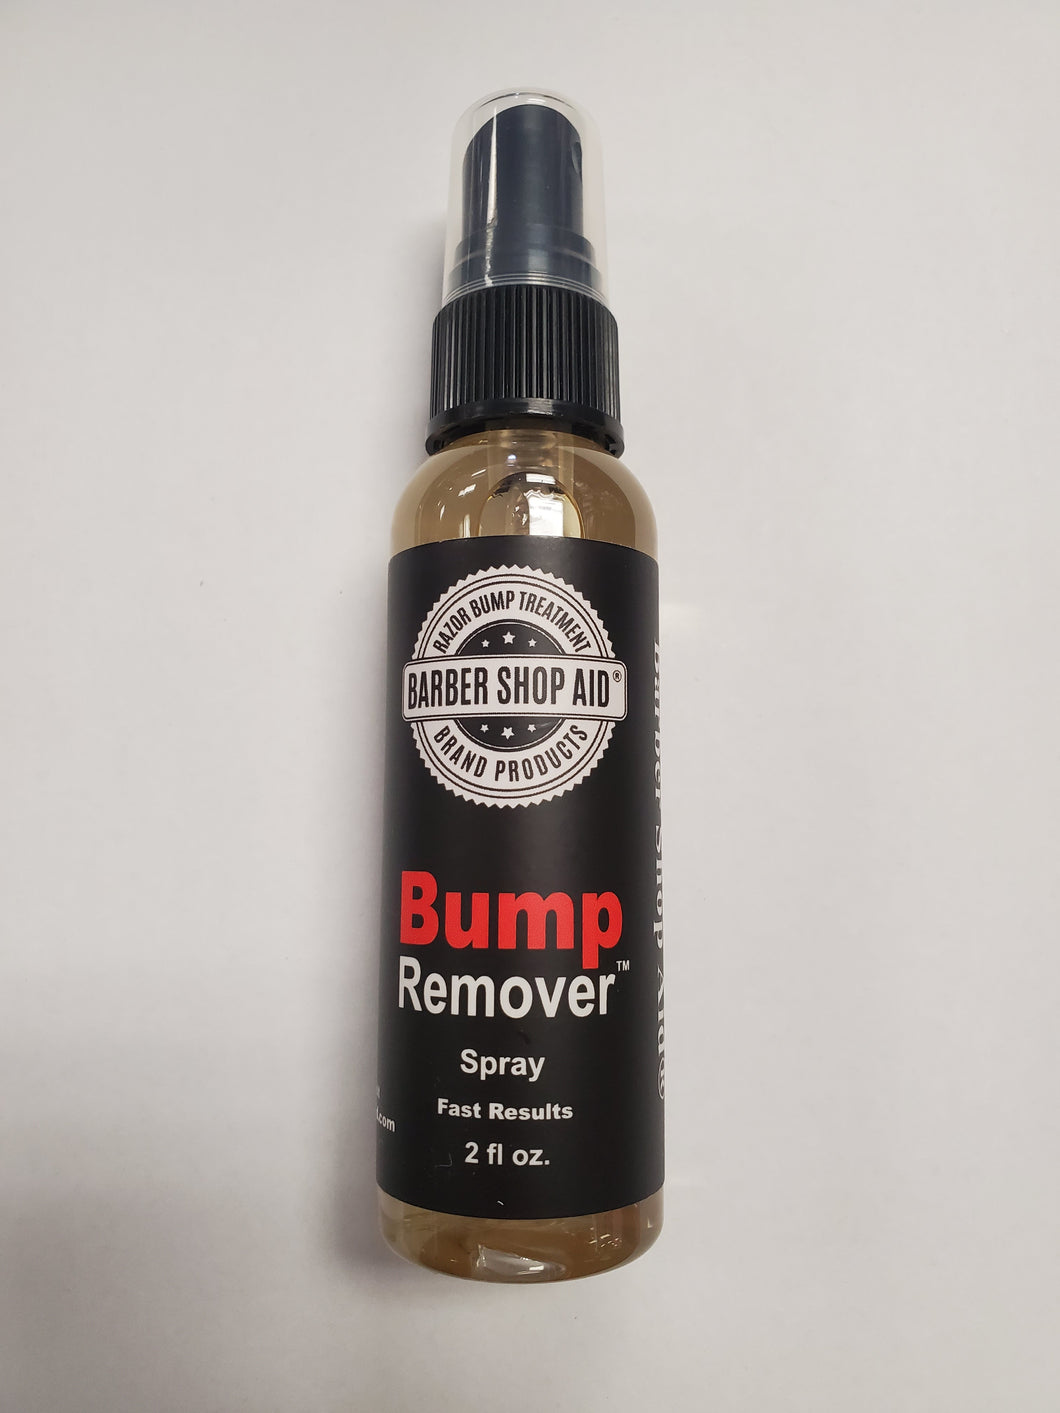 Barber shop aid bump remover spray